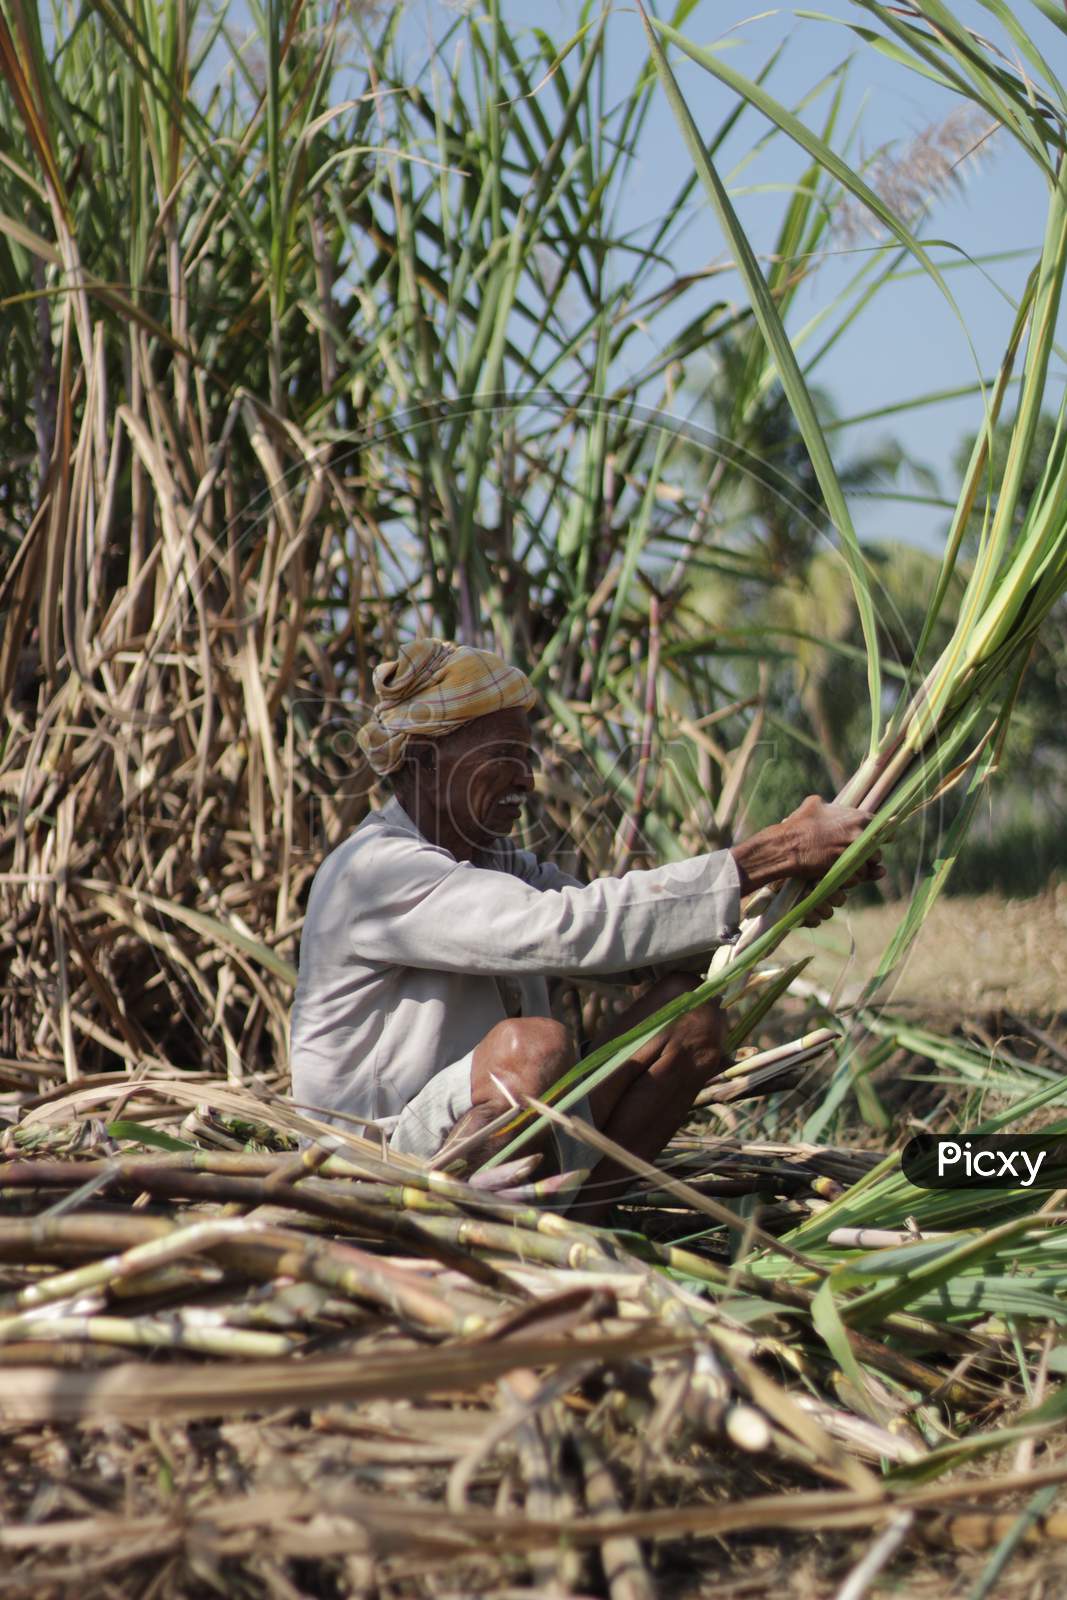 farmer working in sugarcane farm binding roll of sugarcane